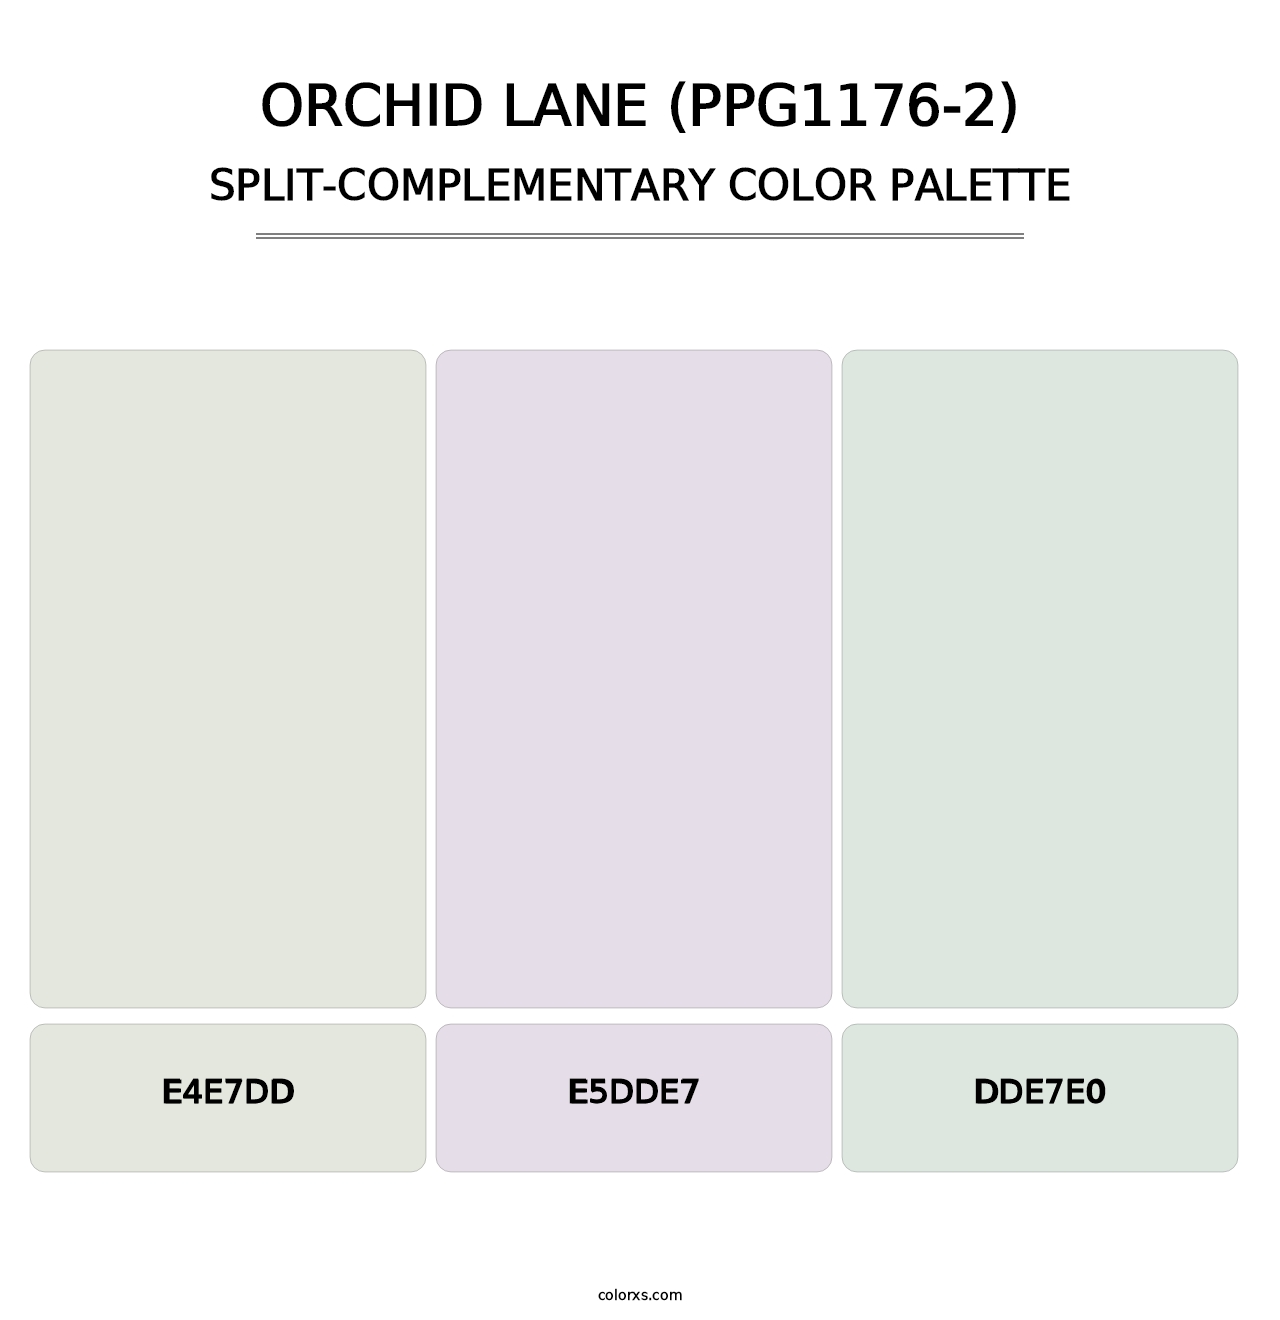 Orchid Lane (PPG1176-2) - Split-Complementary Color Palette